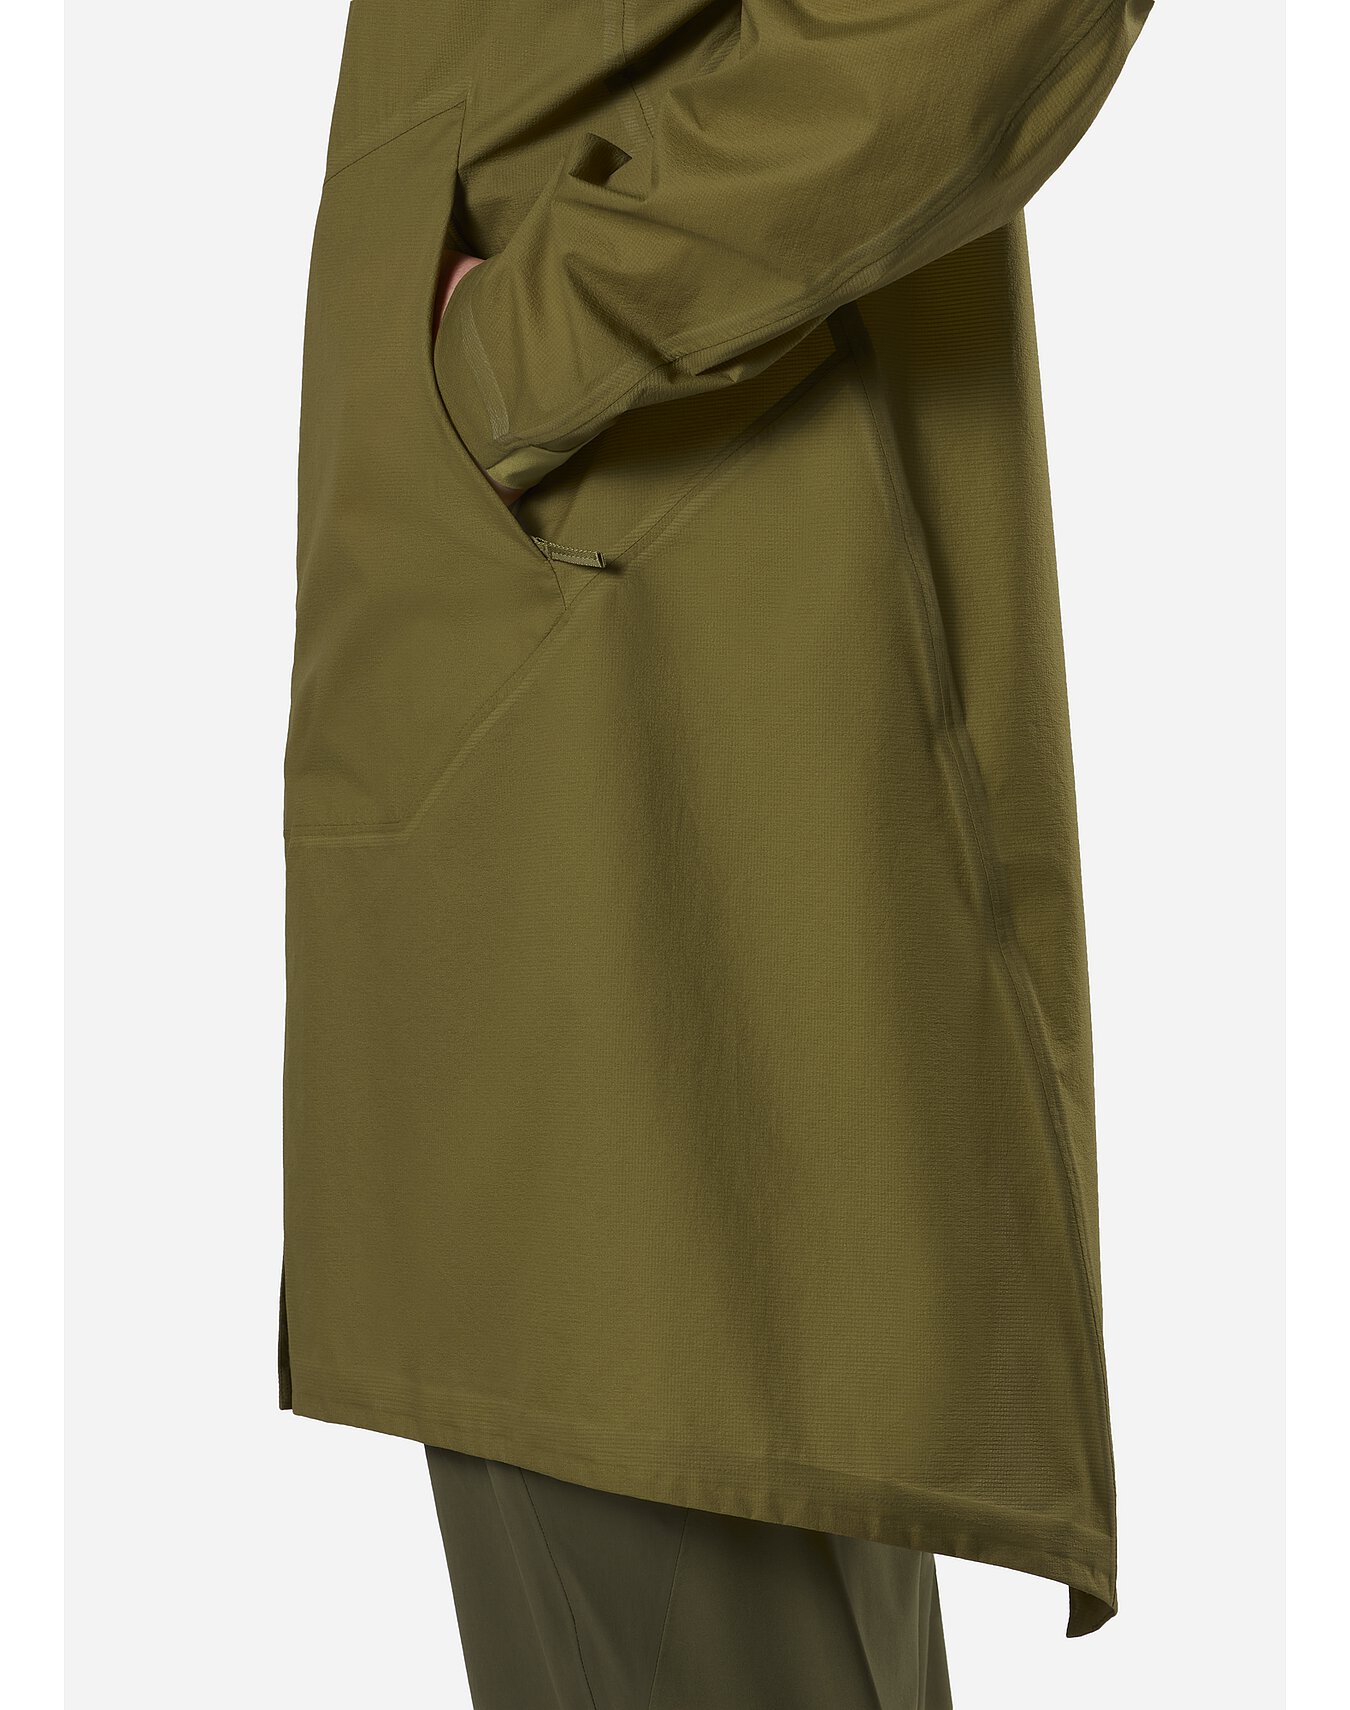 Demlo SL Coat Men's | Arc'teryx Outlet